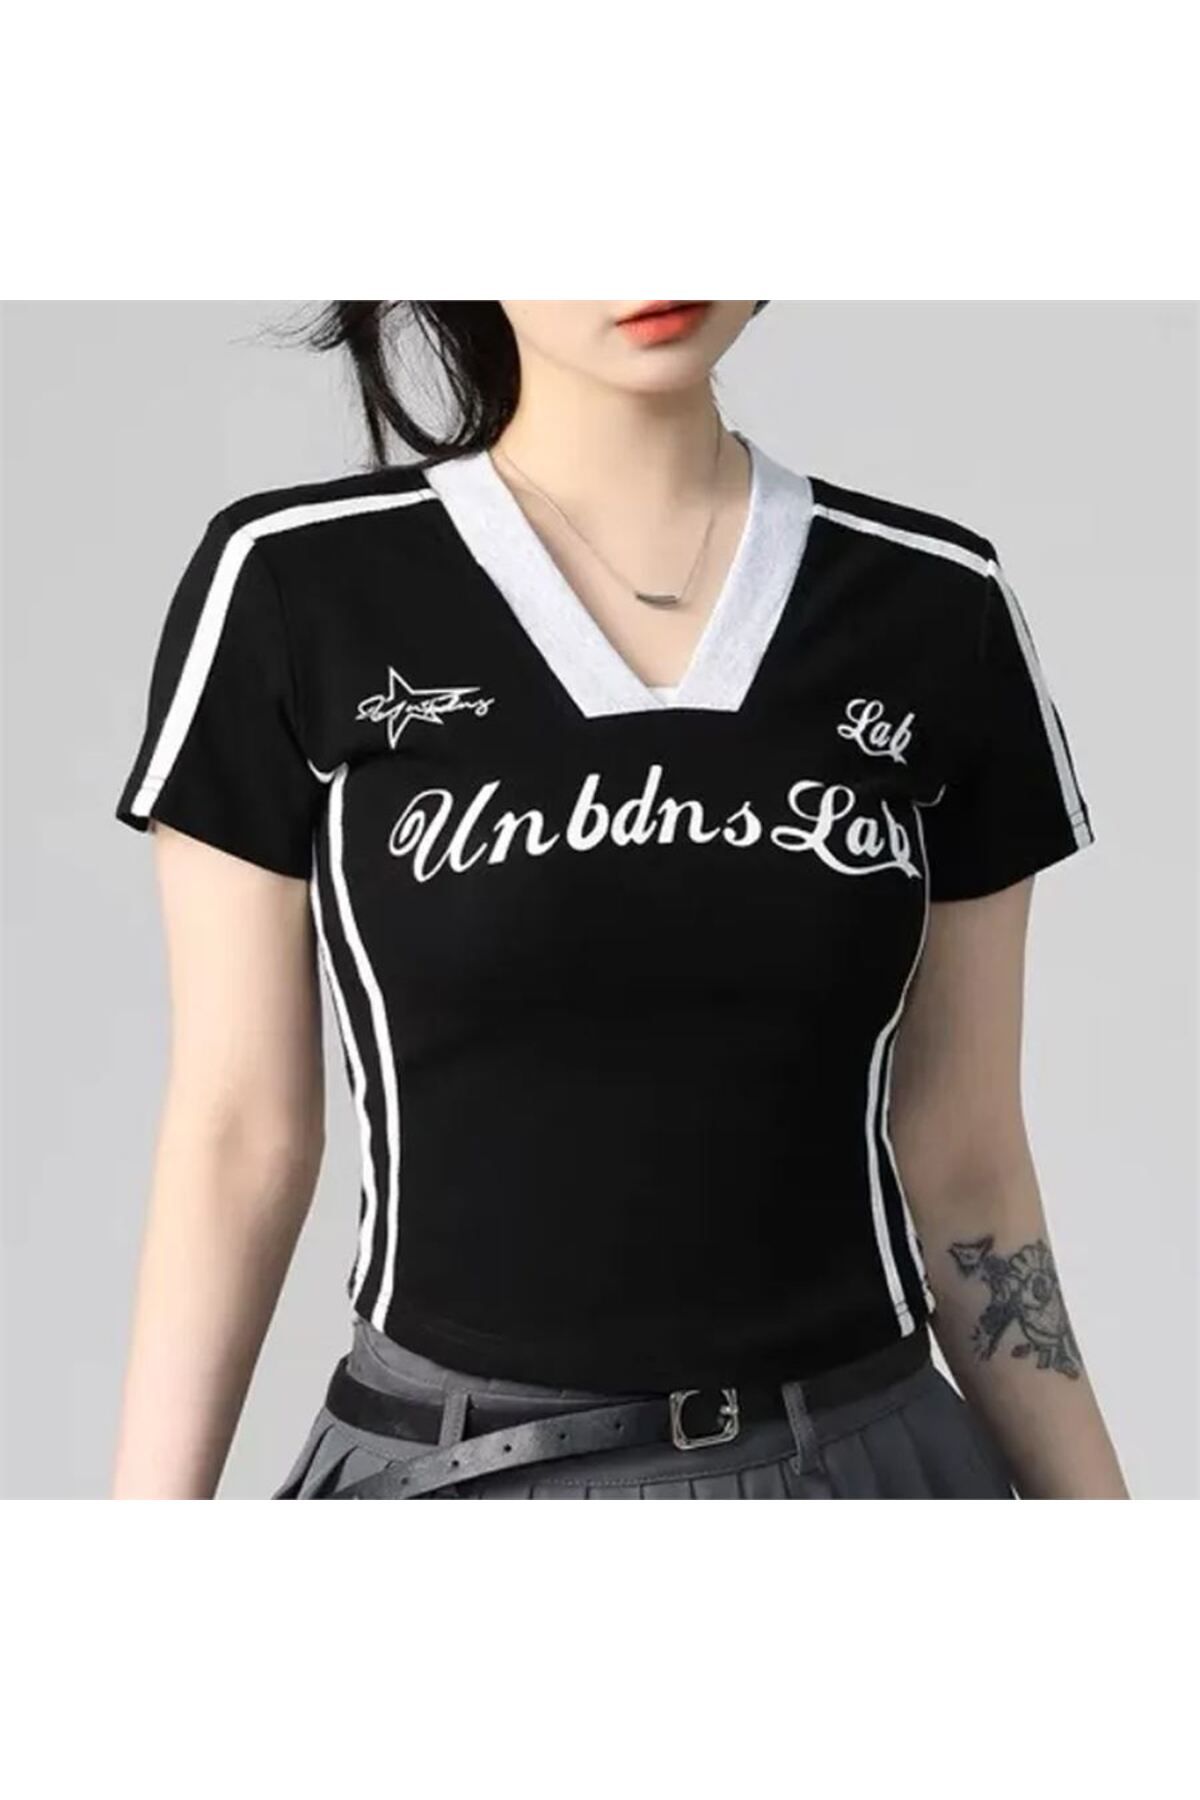 Black Unbdns Lab Half - Uniform Trendyol T-Shirt Gofeel